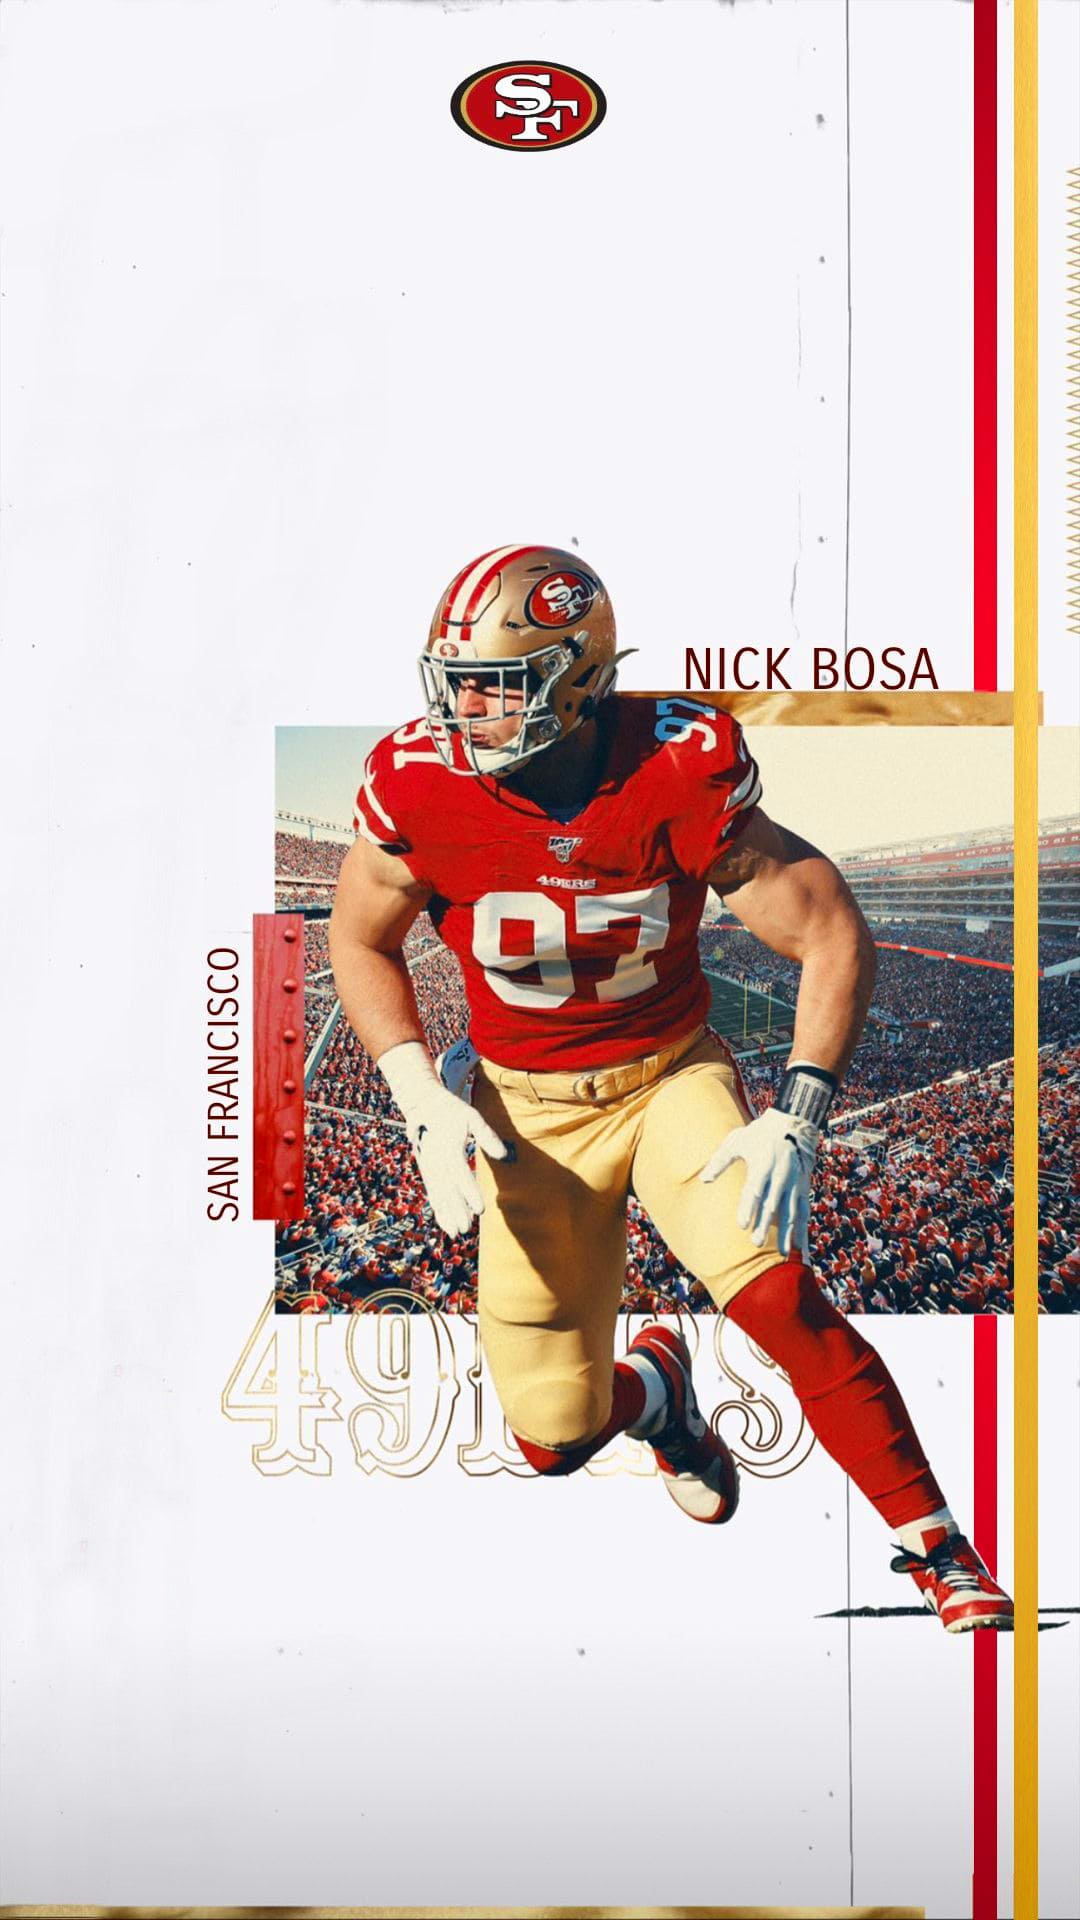 Nick Bosa NFL Wallpapers